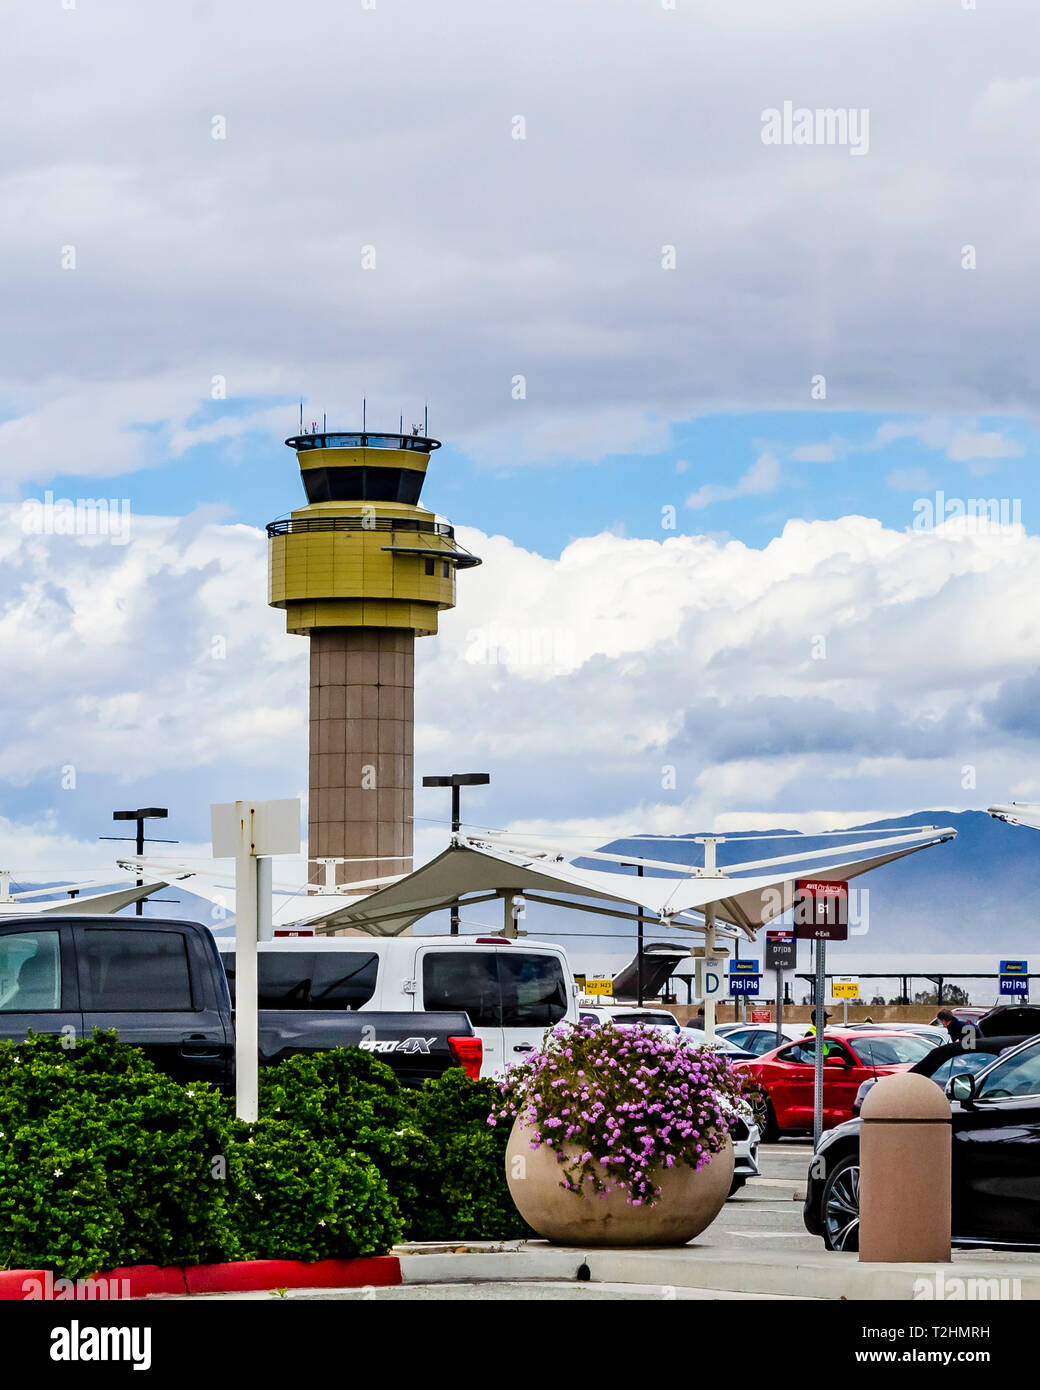 Palm Springs International Airport California USA Stock Photo